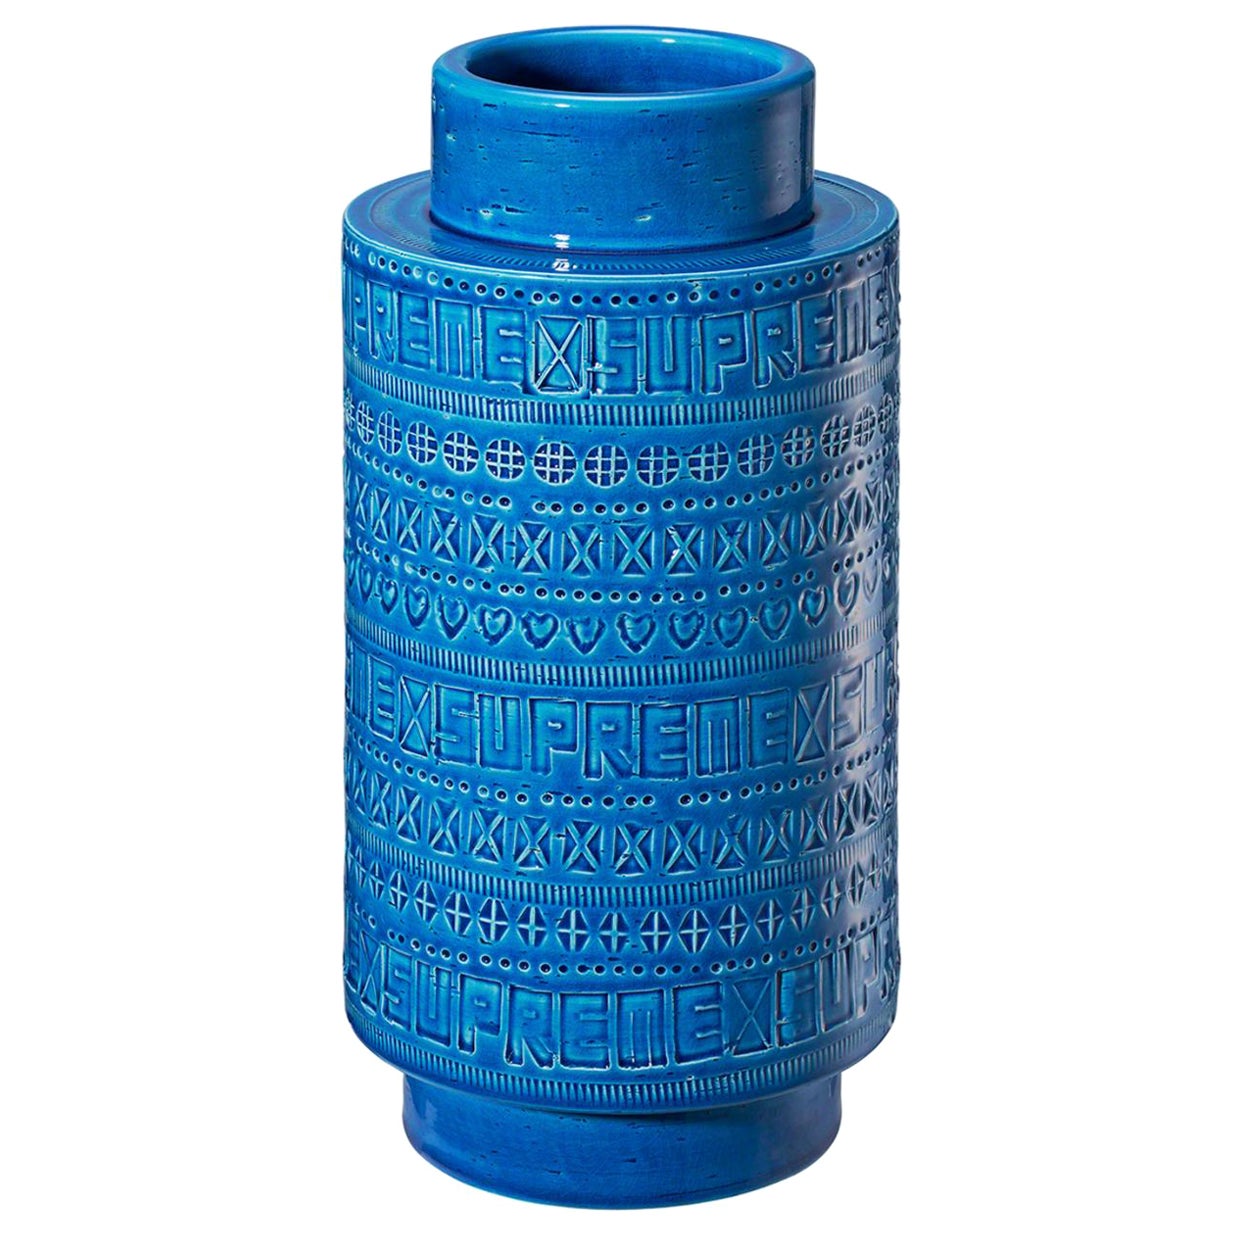 Supreme x Bitossi Spring 2023 Rimini Blu Vase, Limited Edition, Italy. For Sale